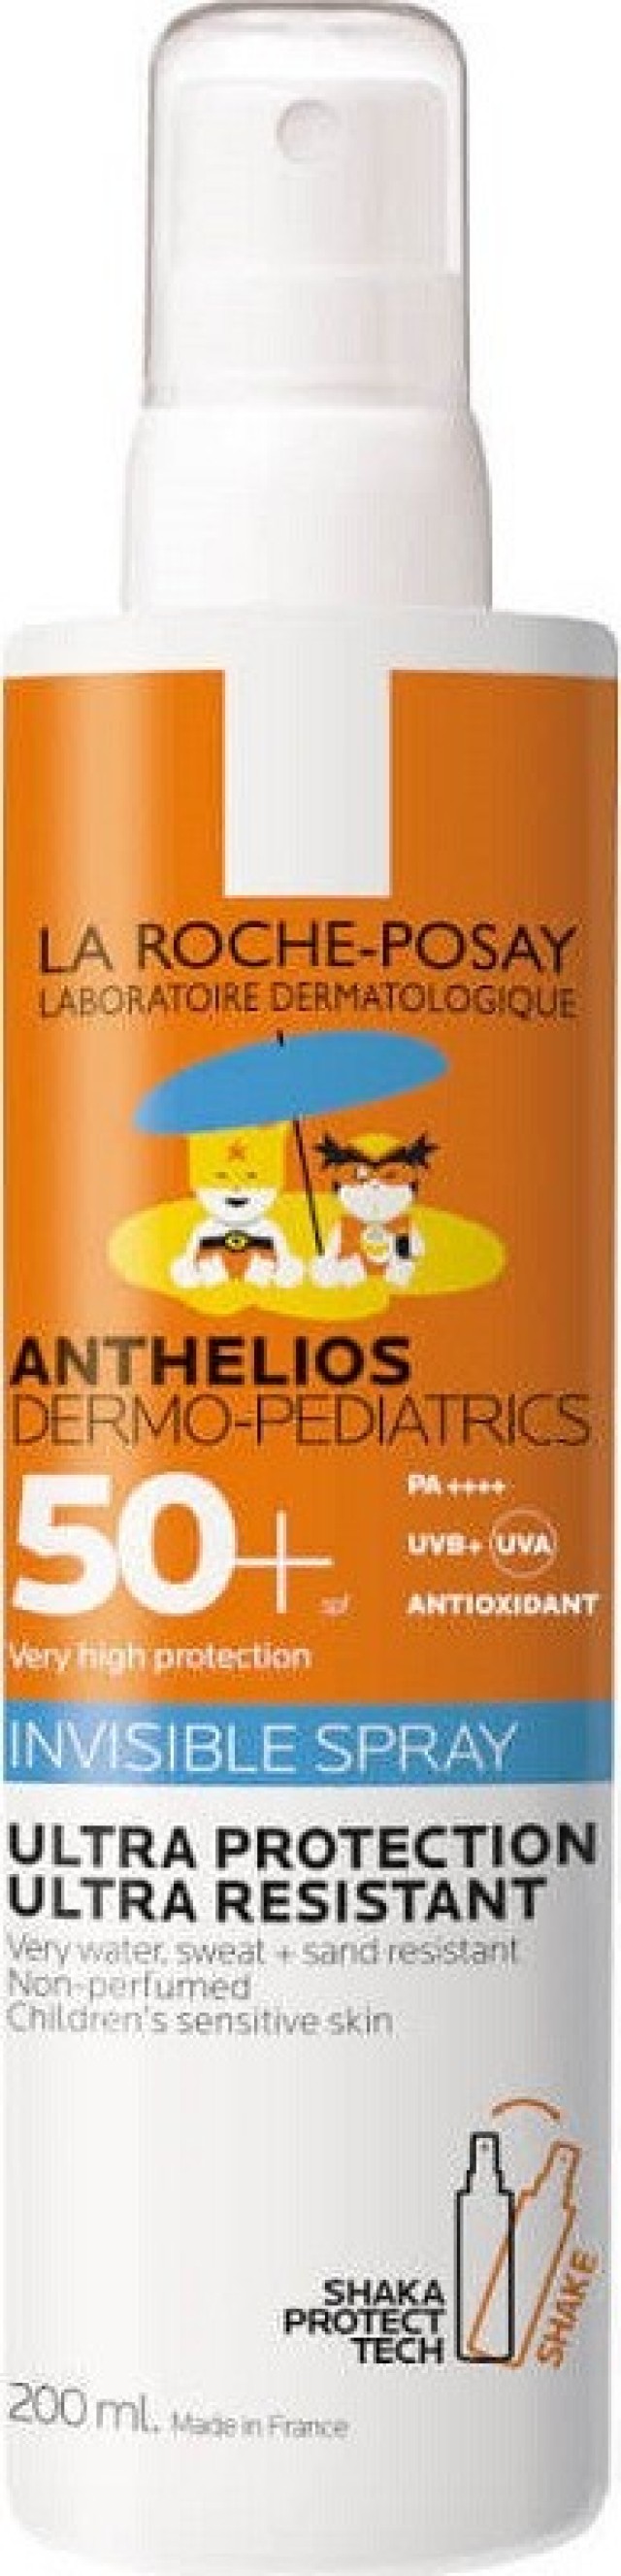 La Roche Posay Anthelios Dermo-Pediatrics Spf50+ Παιδικό Αντηλιακό Σπρέι Σώματος Υψηλής Προστασίας 200ml